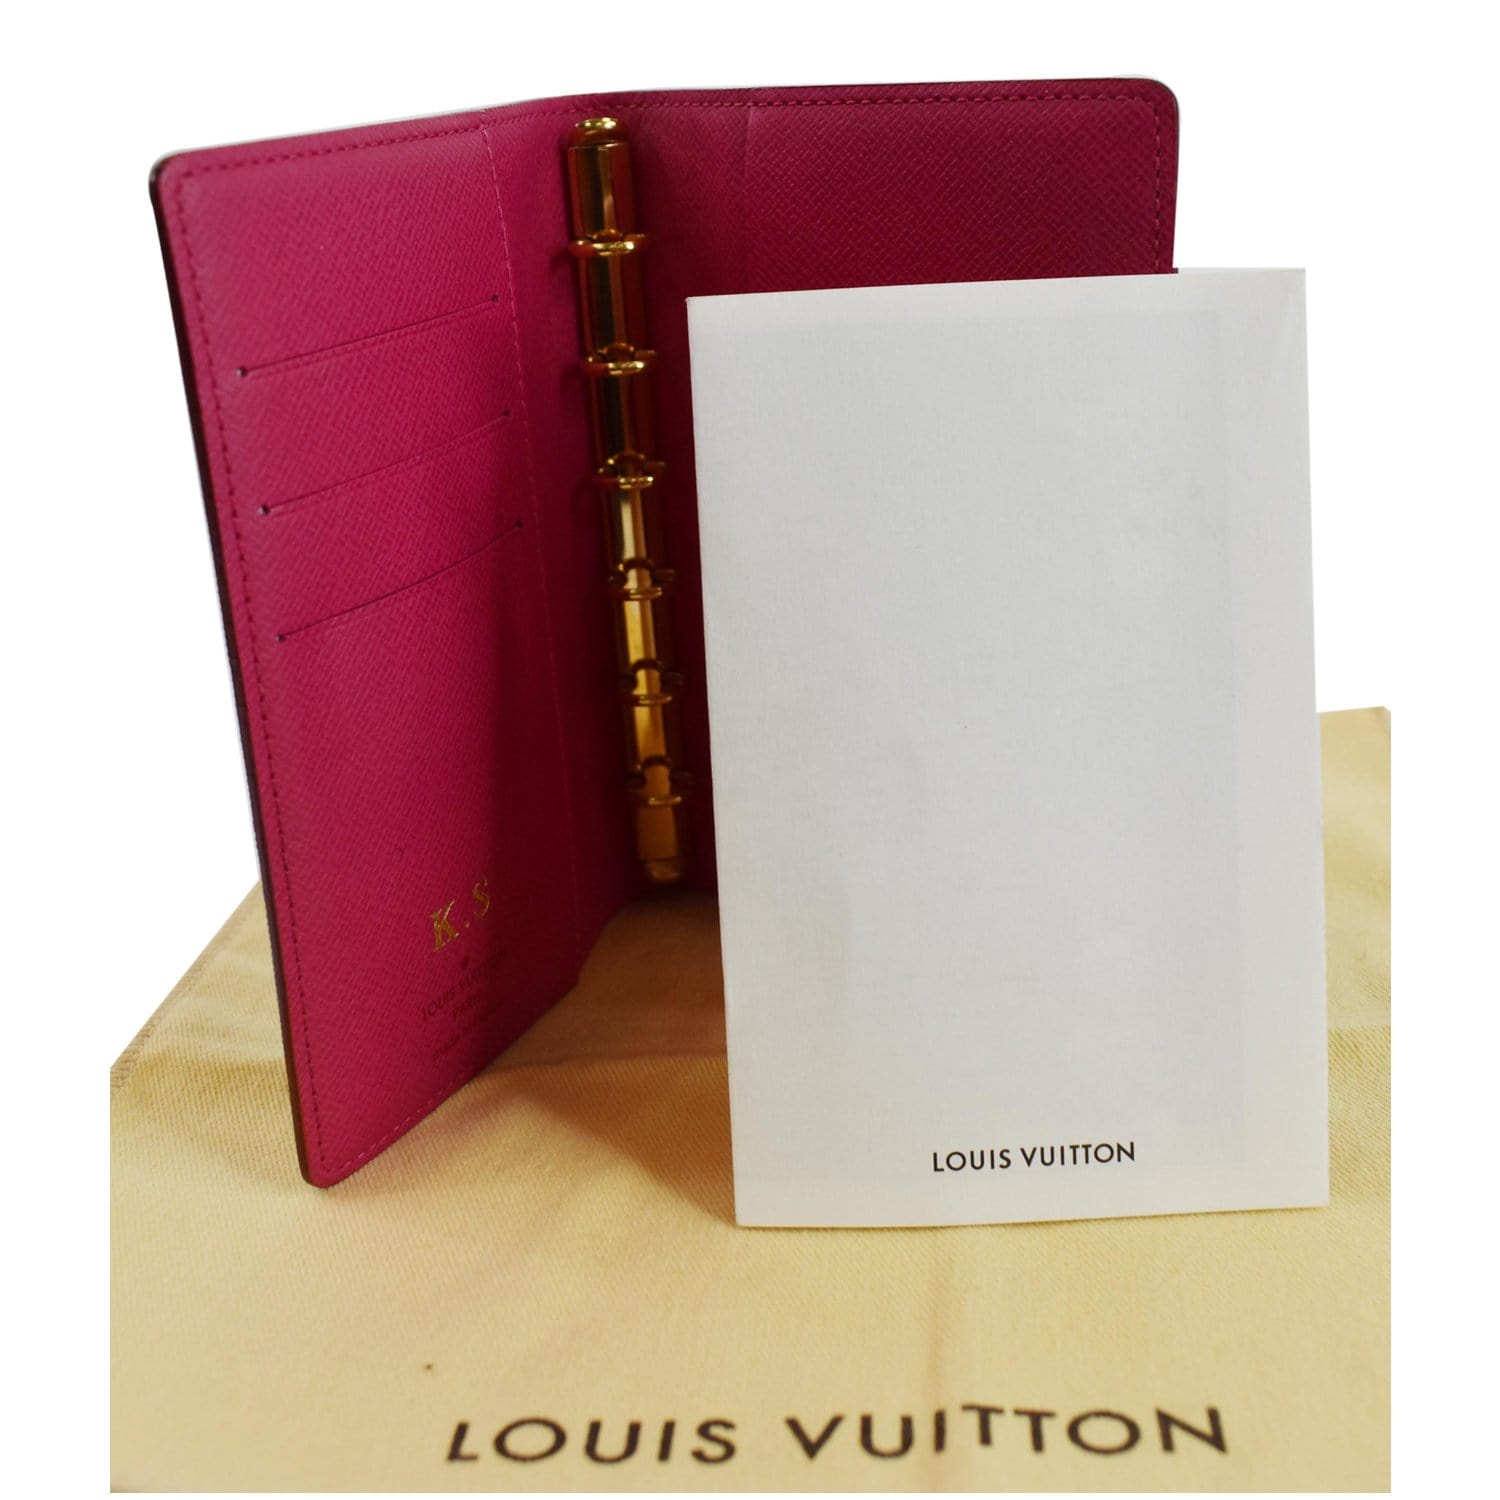 Louis Vuitton Multicolor Agenda Partonaire Pm Day Planner Cover